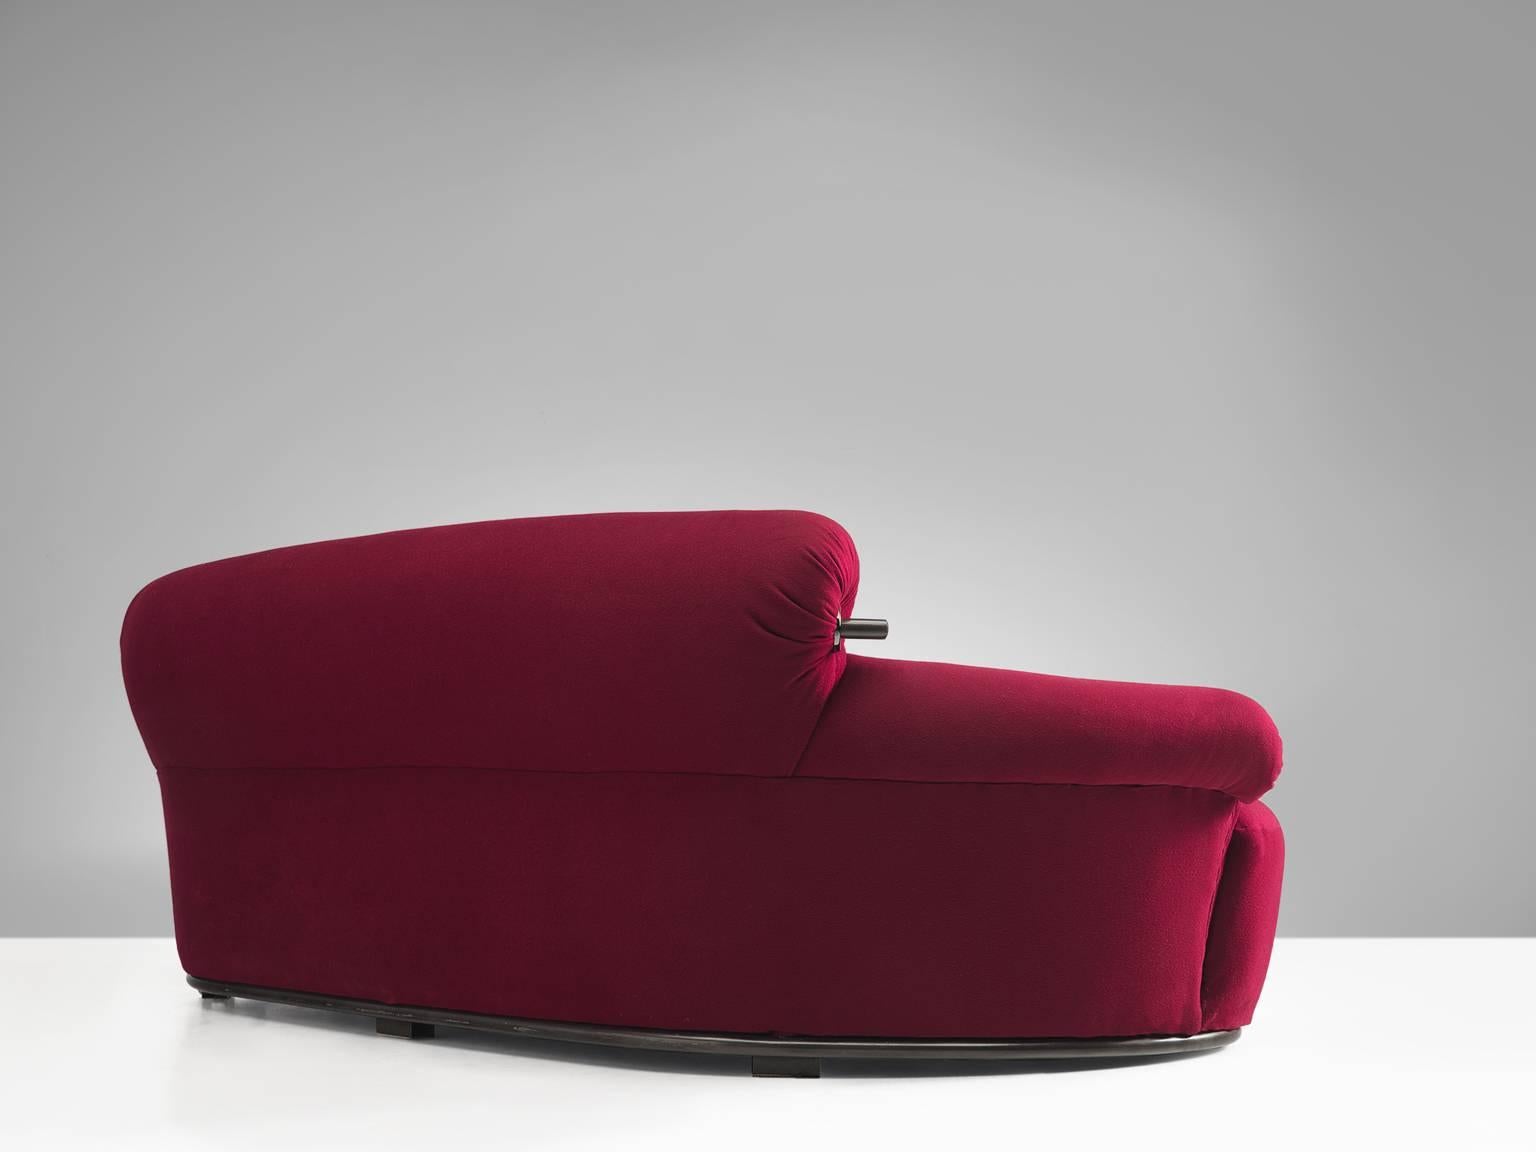 Late 20th Century Set of Two 'Toro' Sofas by Luige Caccia Dominioni